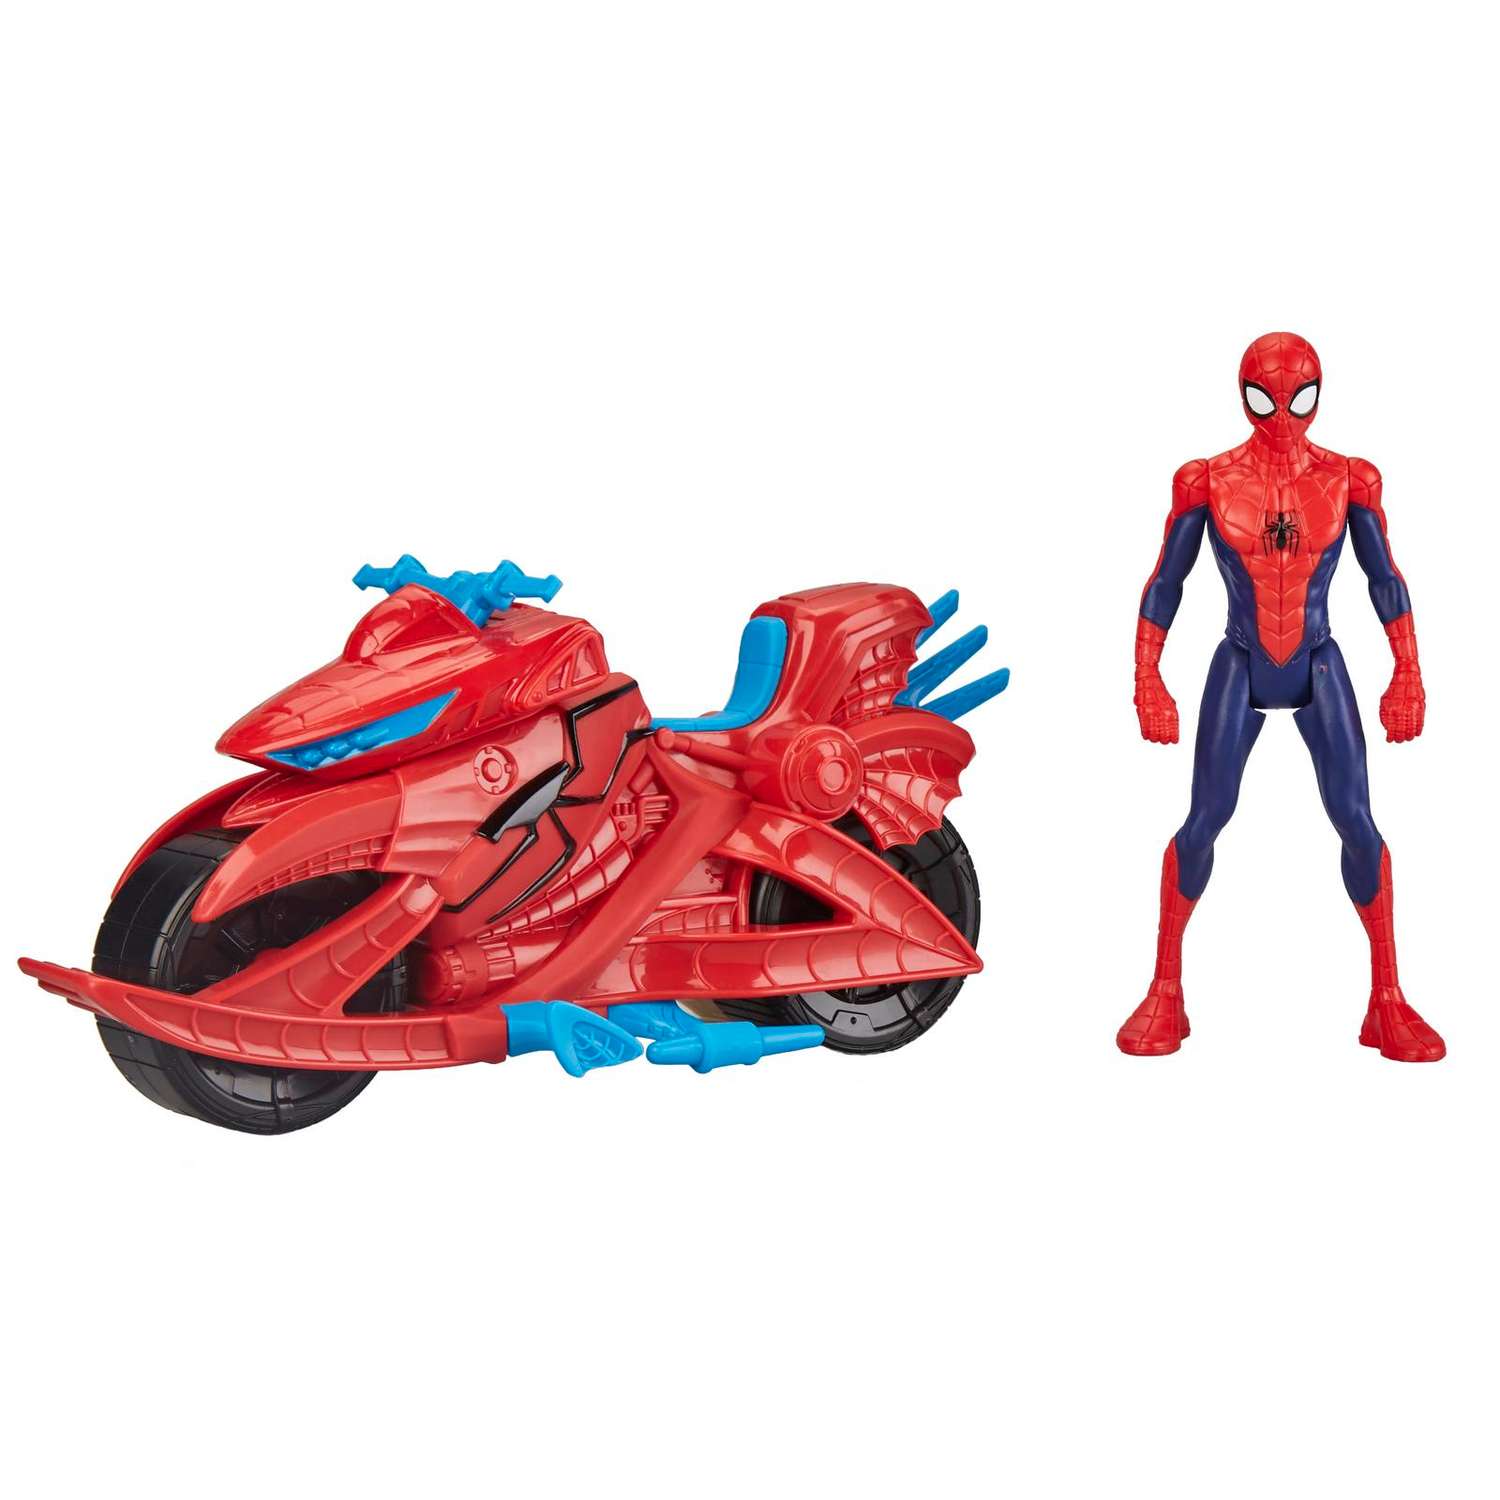 Фигурка Человек-Паук (Spider-man) Человек-паук с транспортом E3368EU4 - фото 3